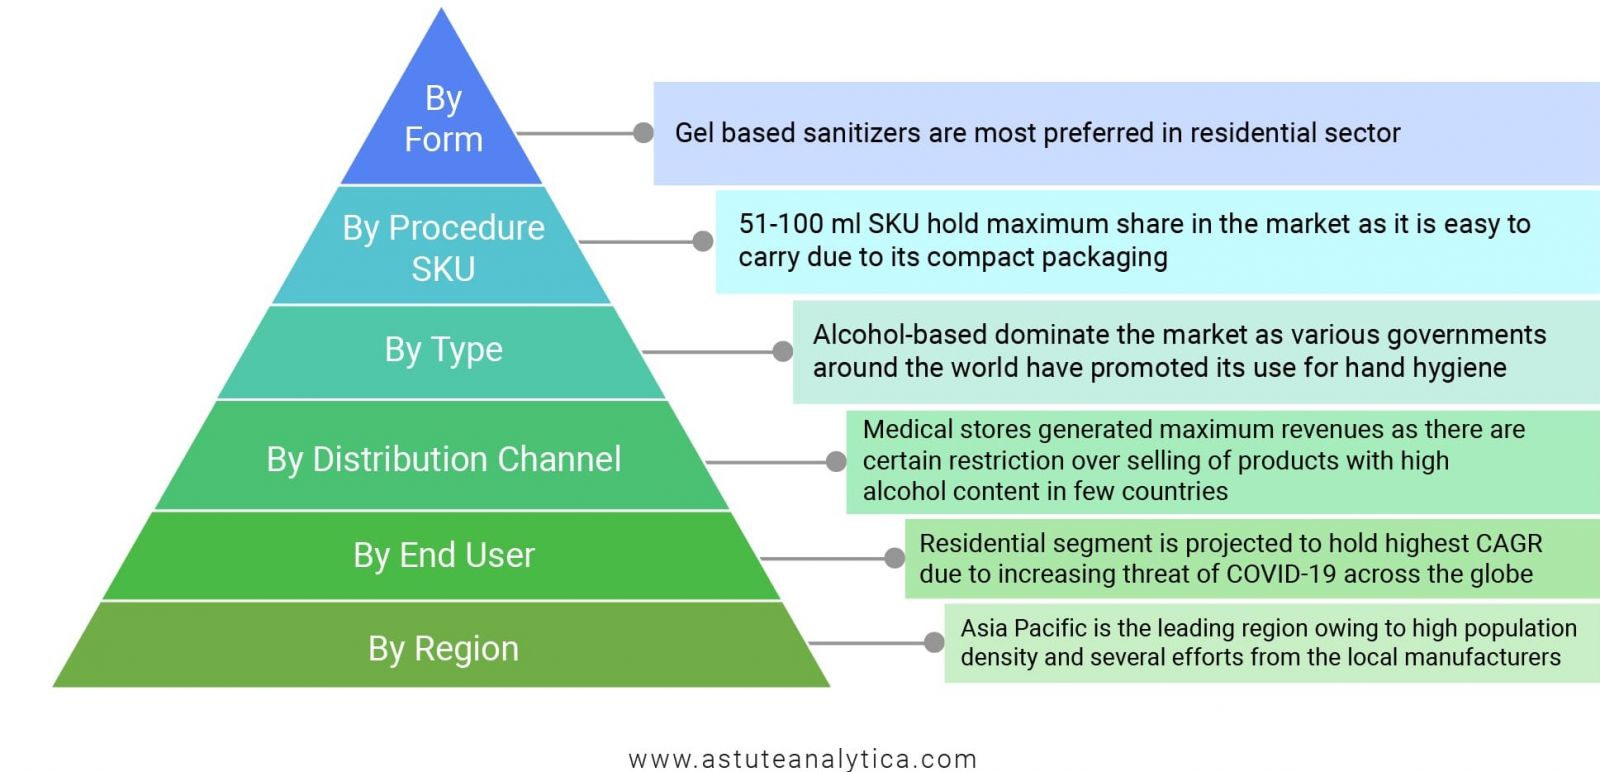 Segmentation overview of the hand sanitizer market